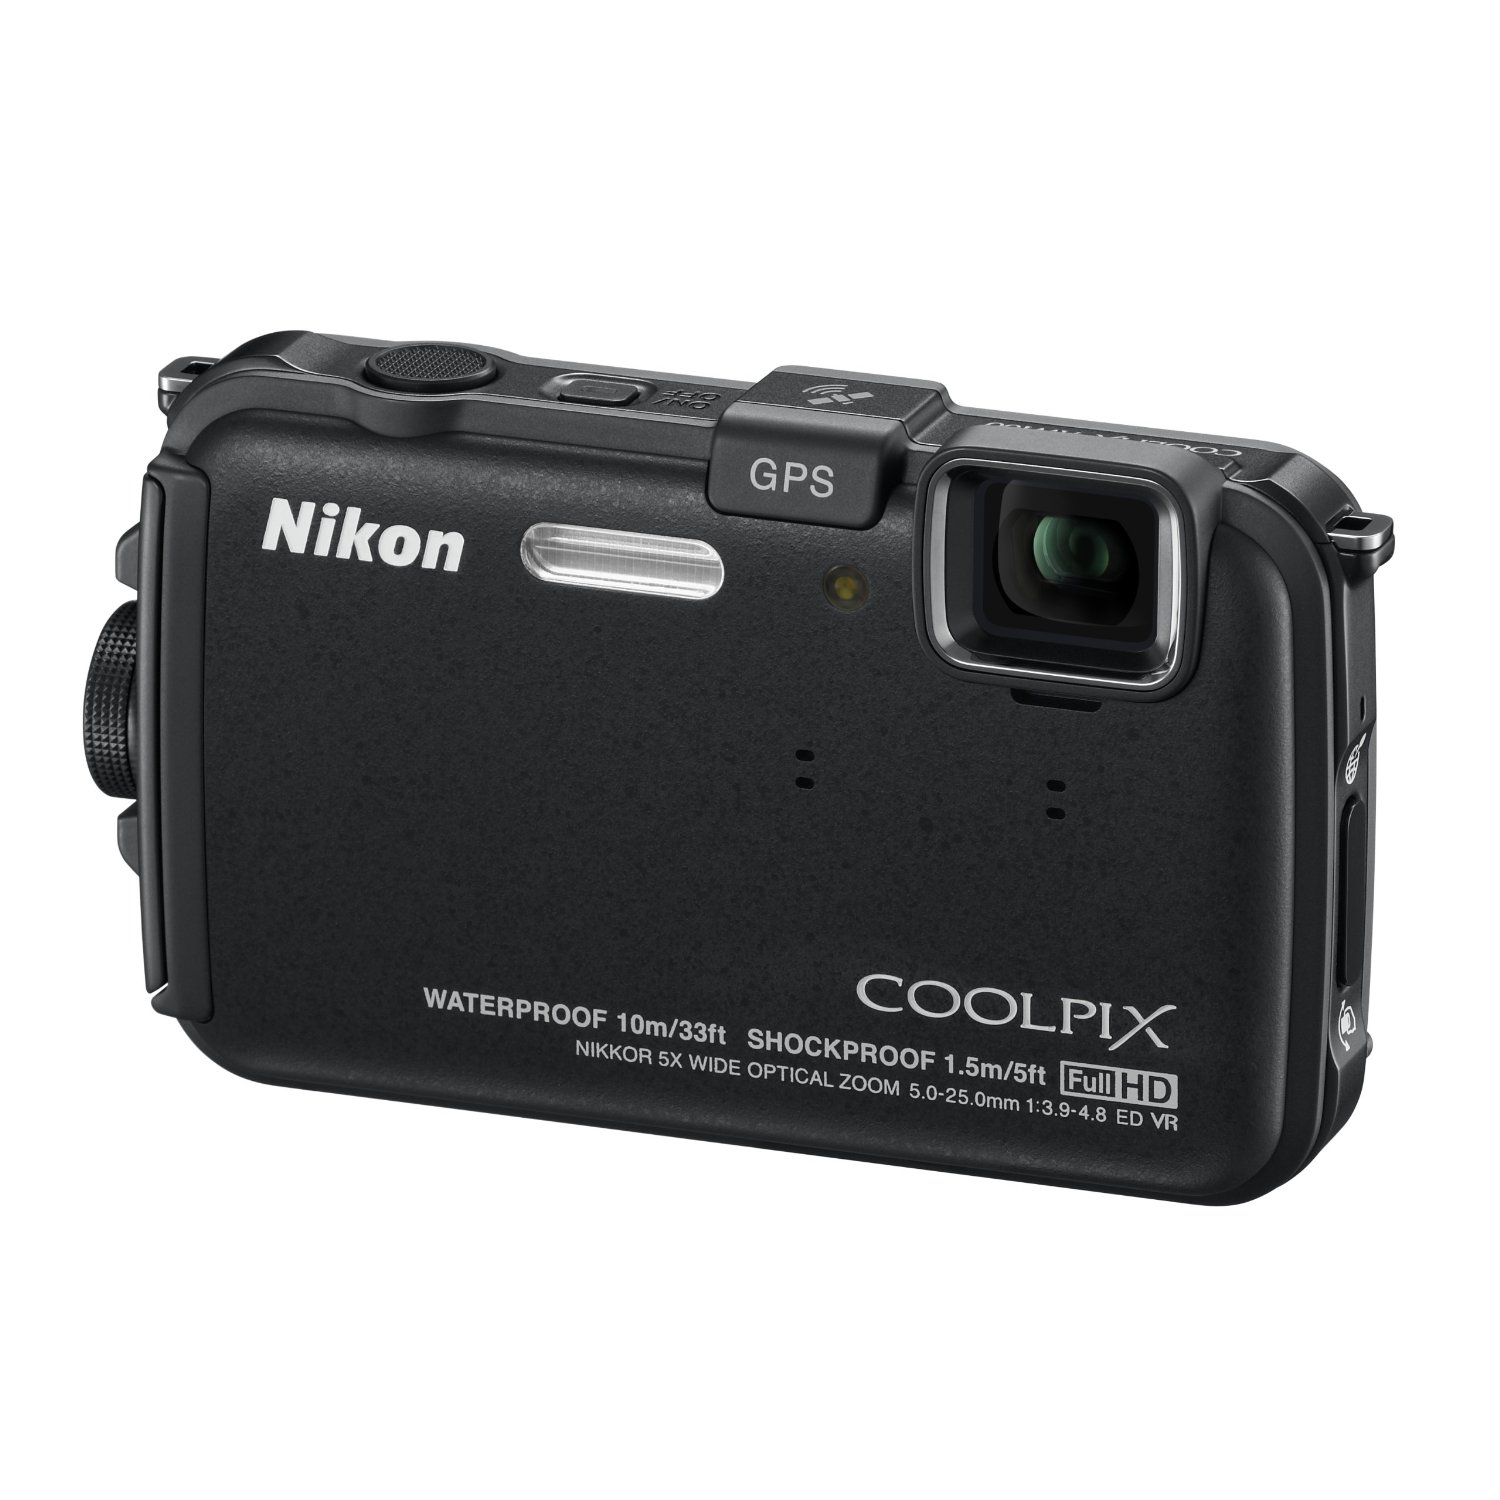 http://thetechjournal.com/wp-content/uploads/images/1110/1318937820-nikon-coolpix-aw100-16-mp-cmos-waterproof-digital-camera-10.jpg